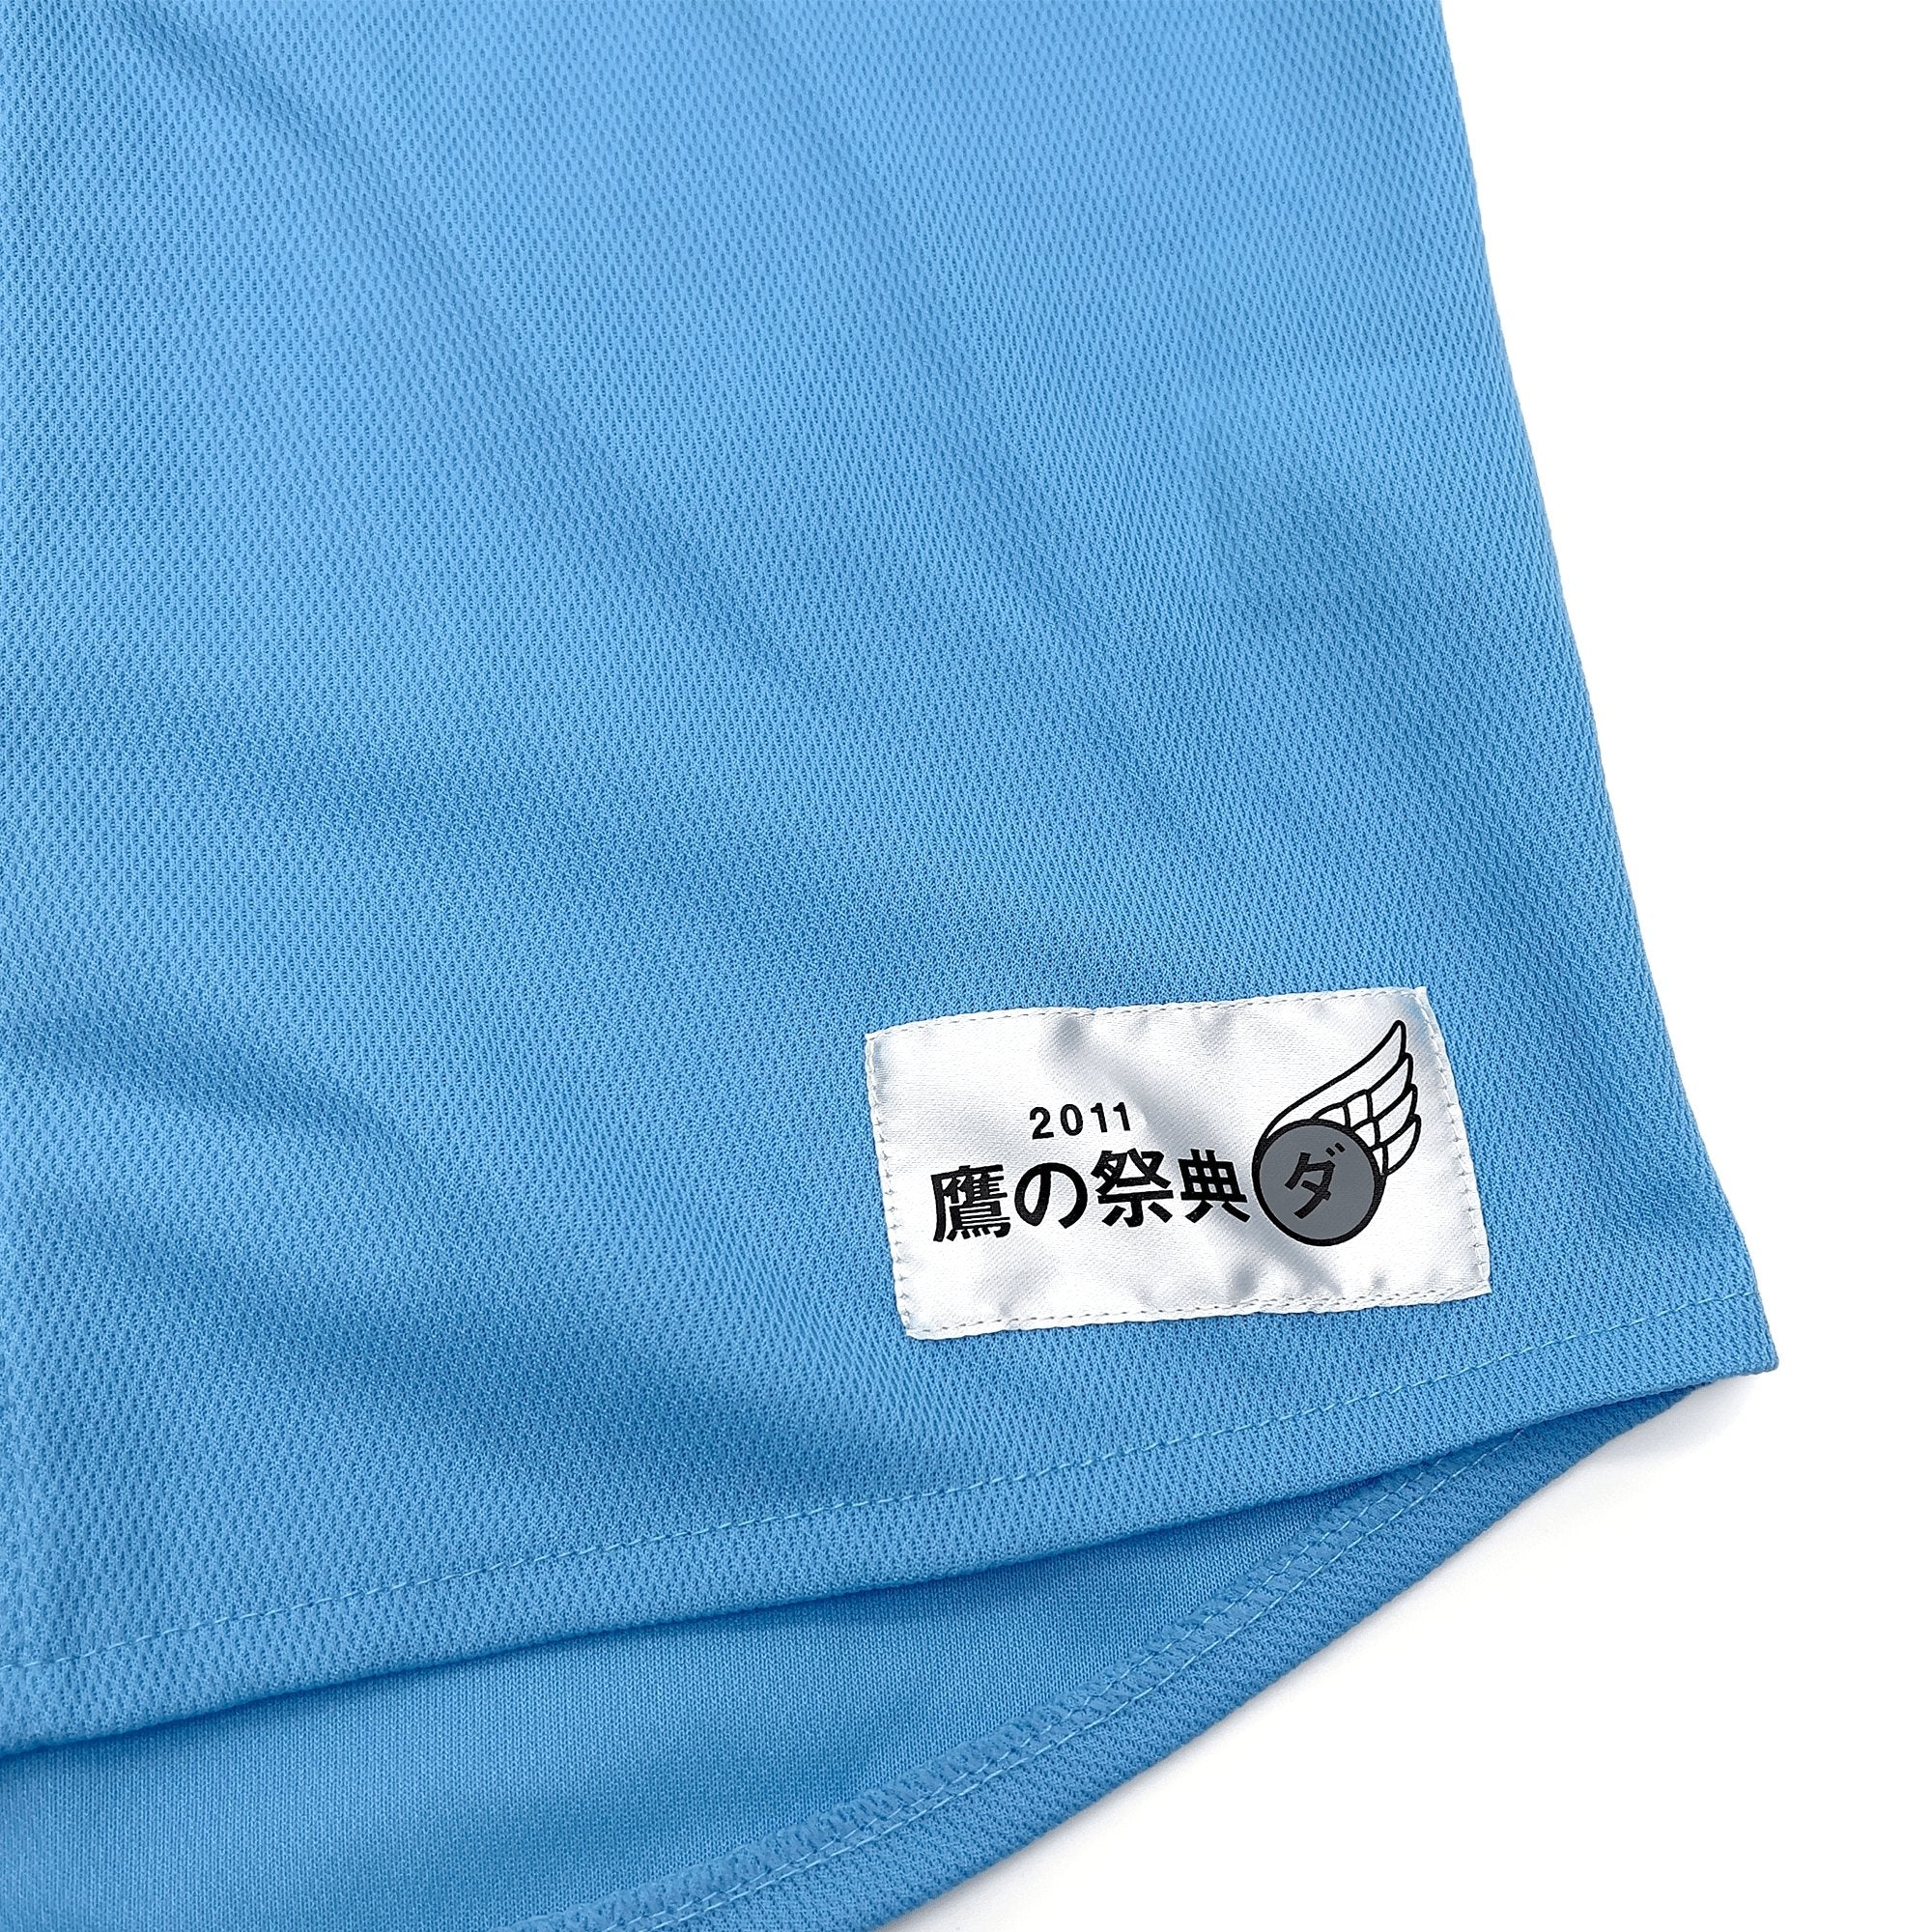 New Vintage Retro NPB Japan Softbank Hawks Baseball Jersey 2011 Blue